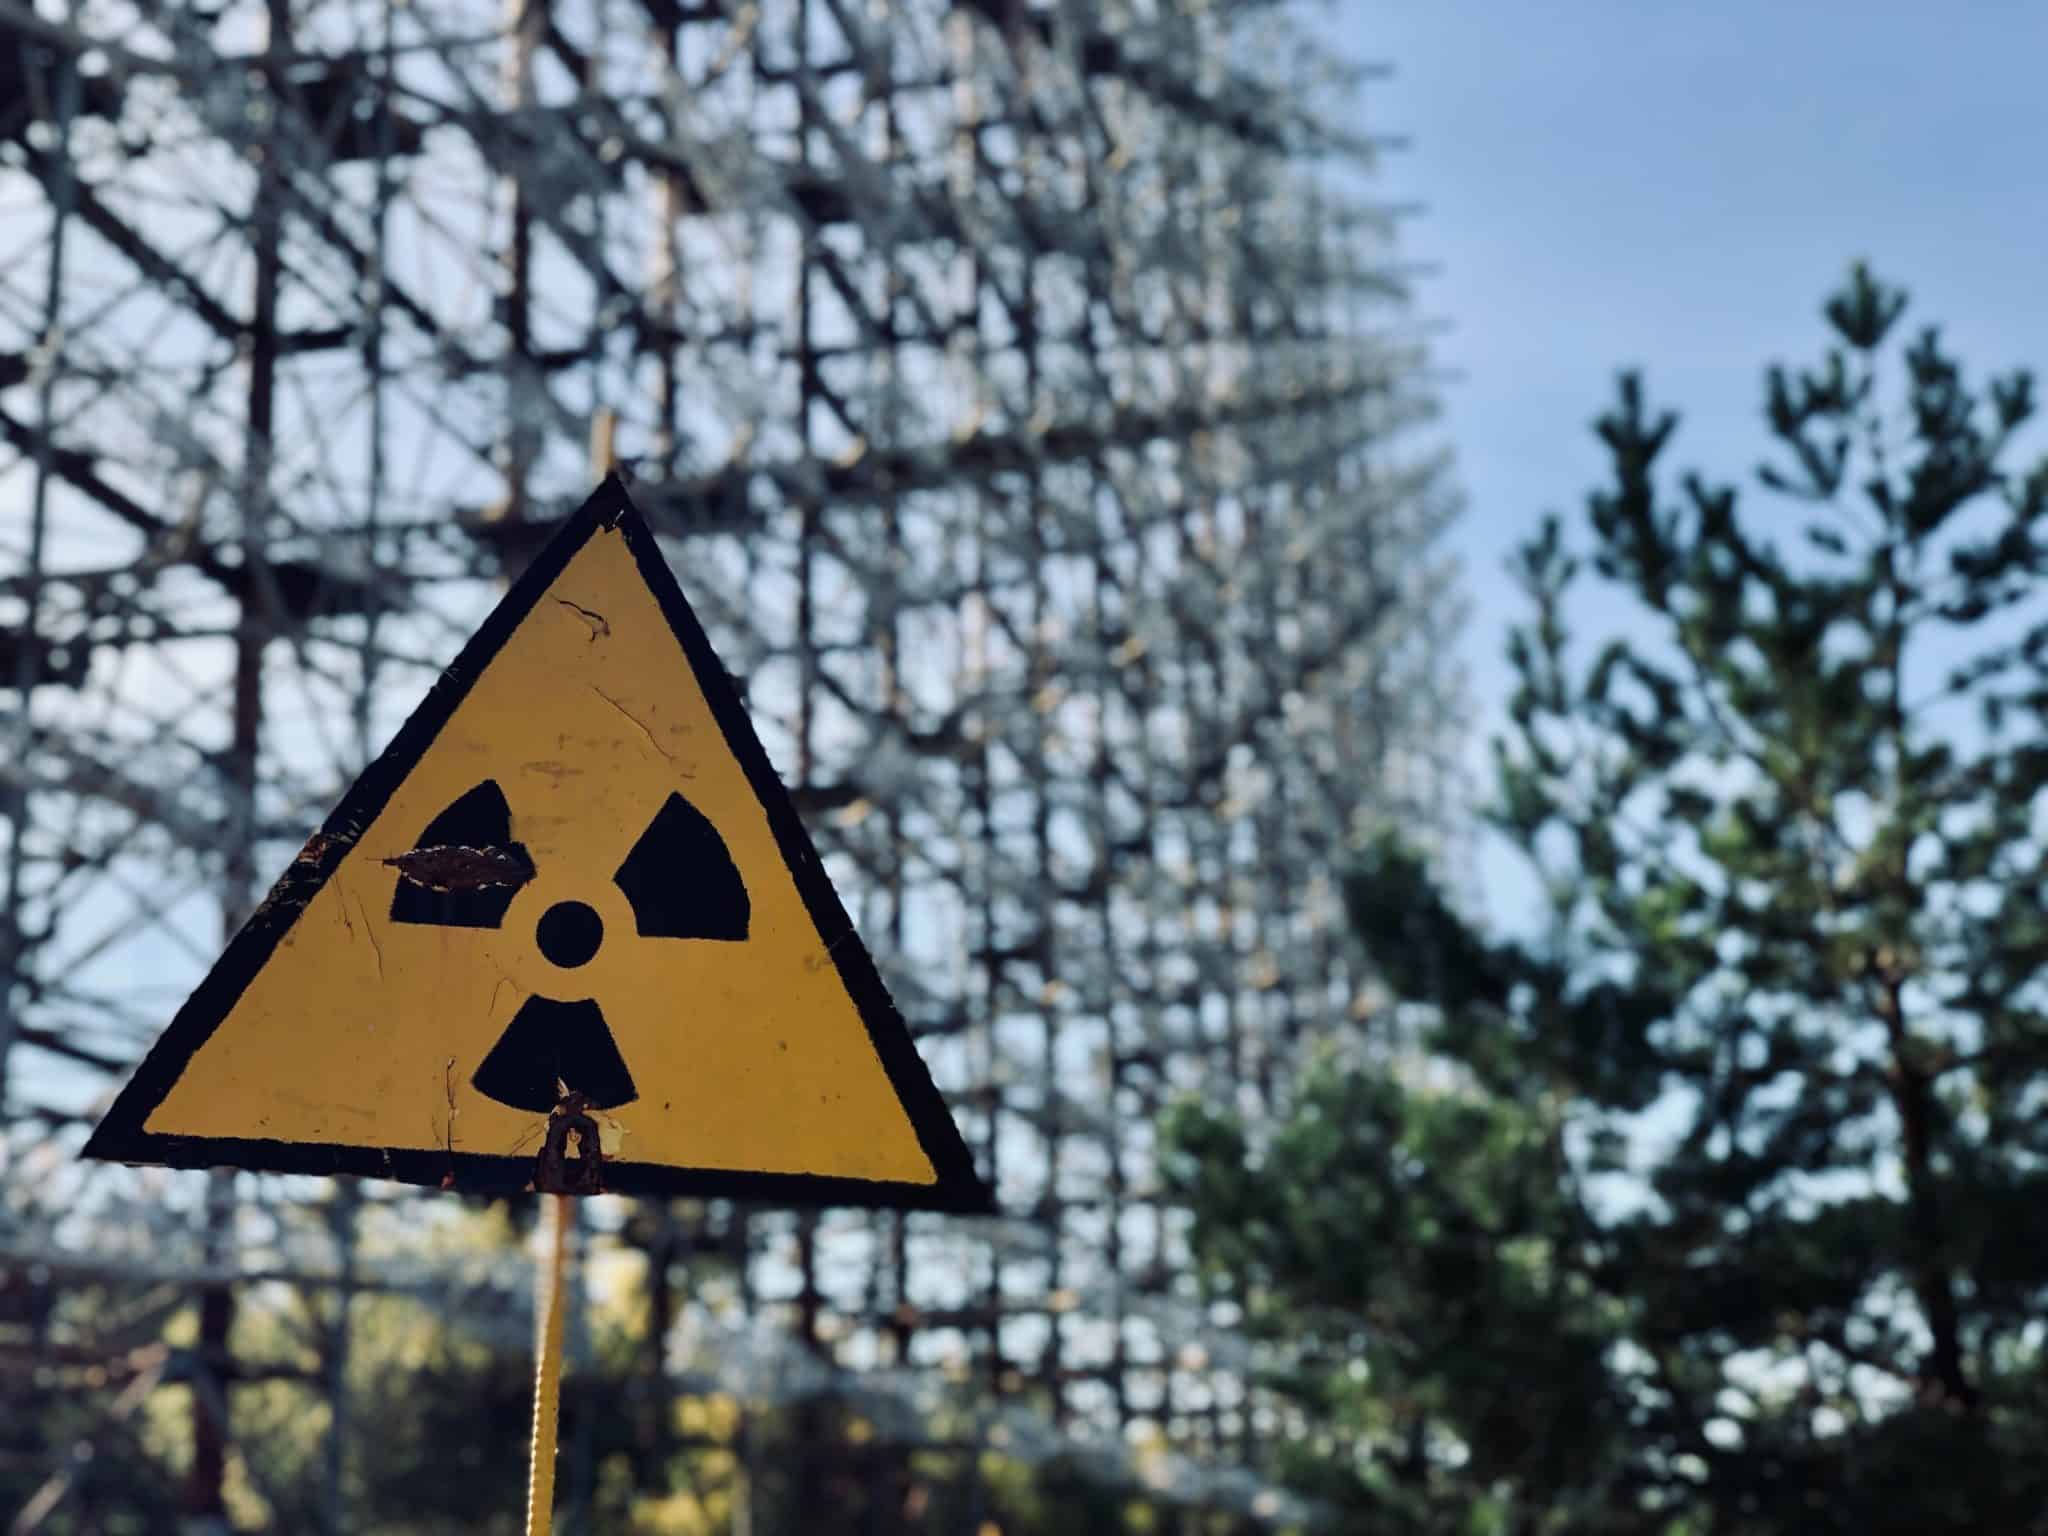 chernobyl visit safe